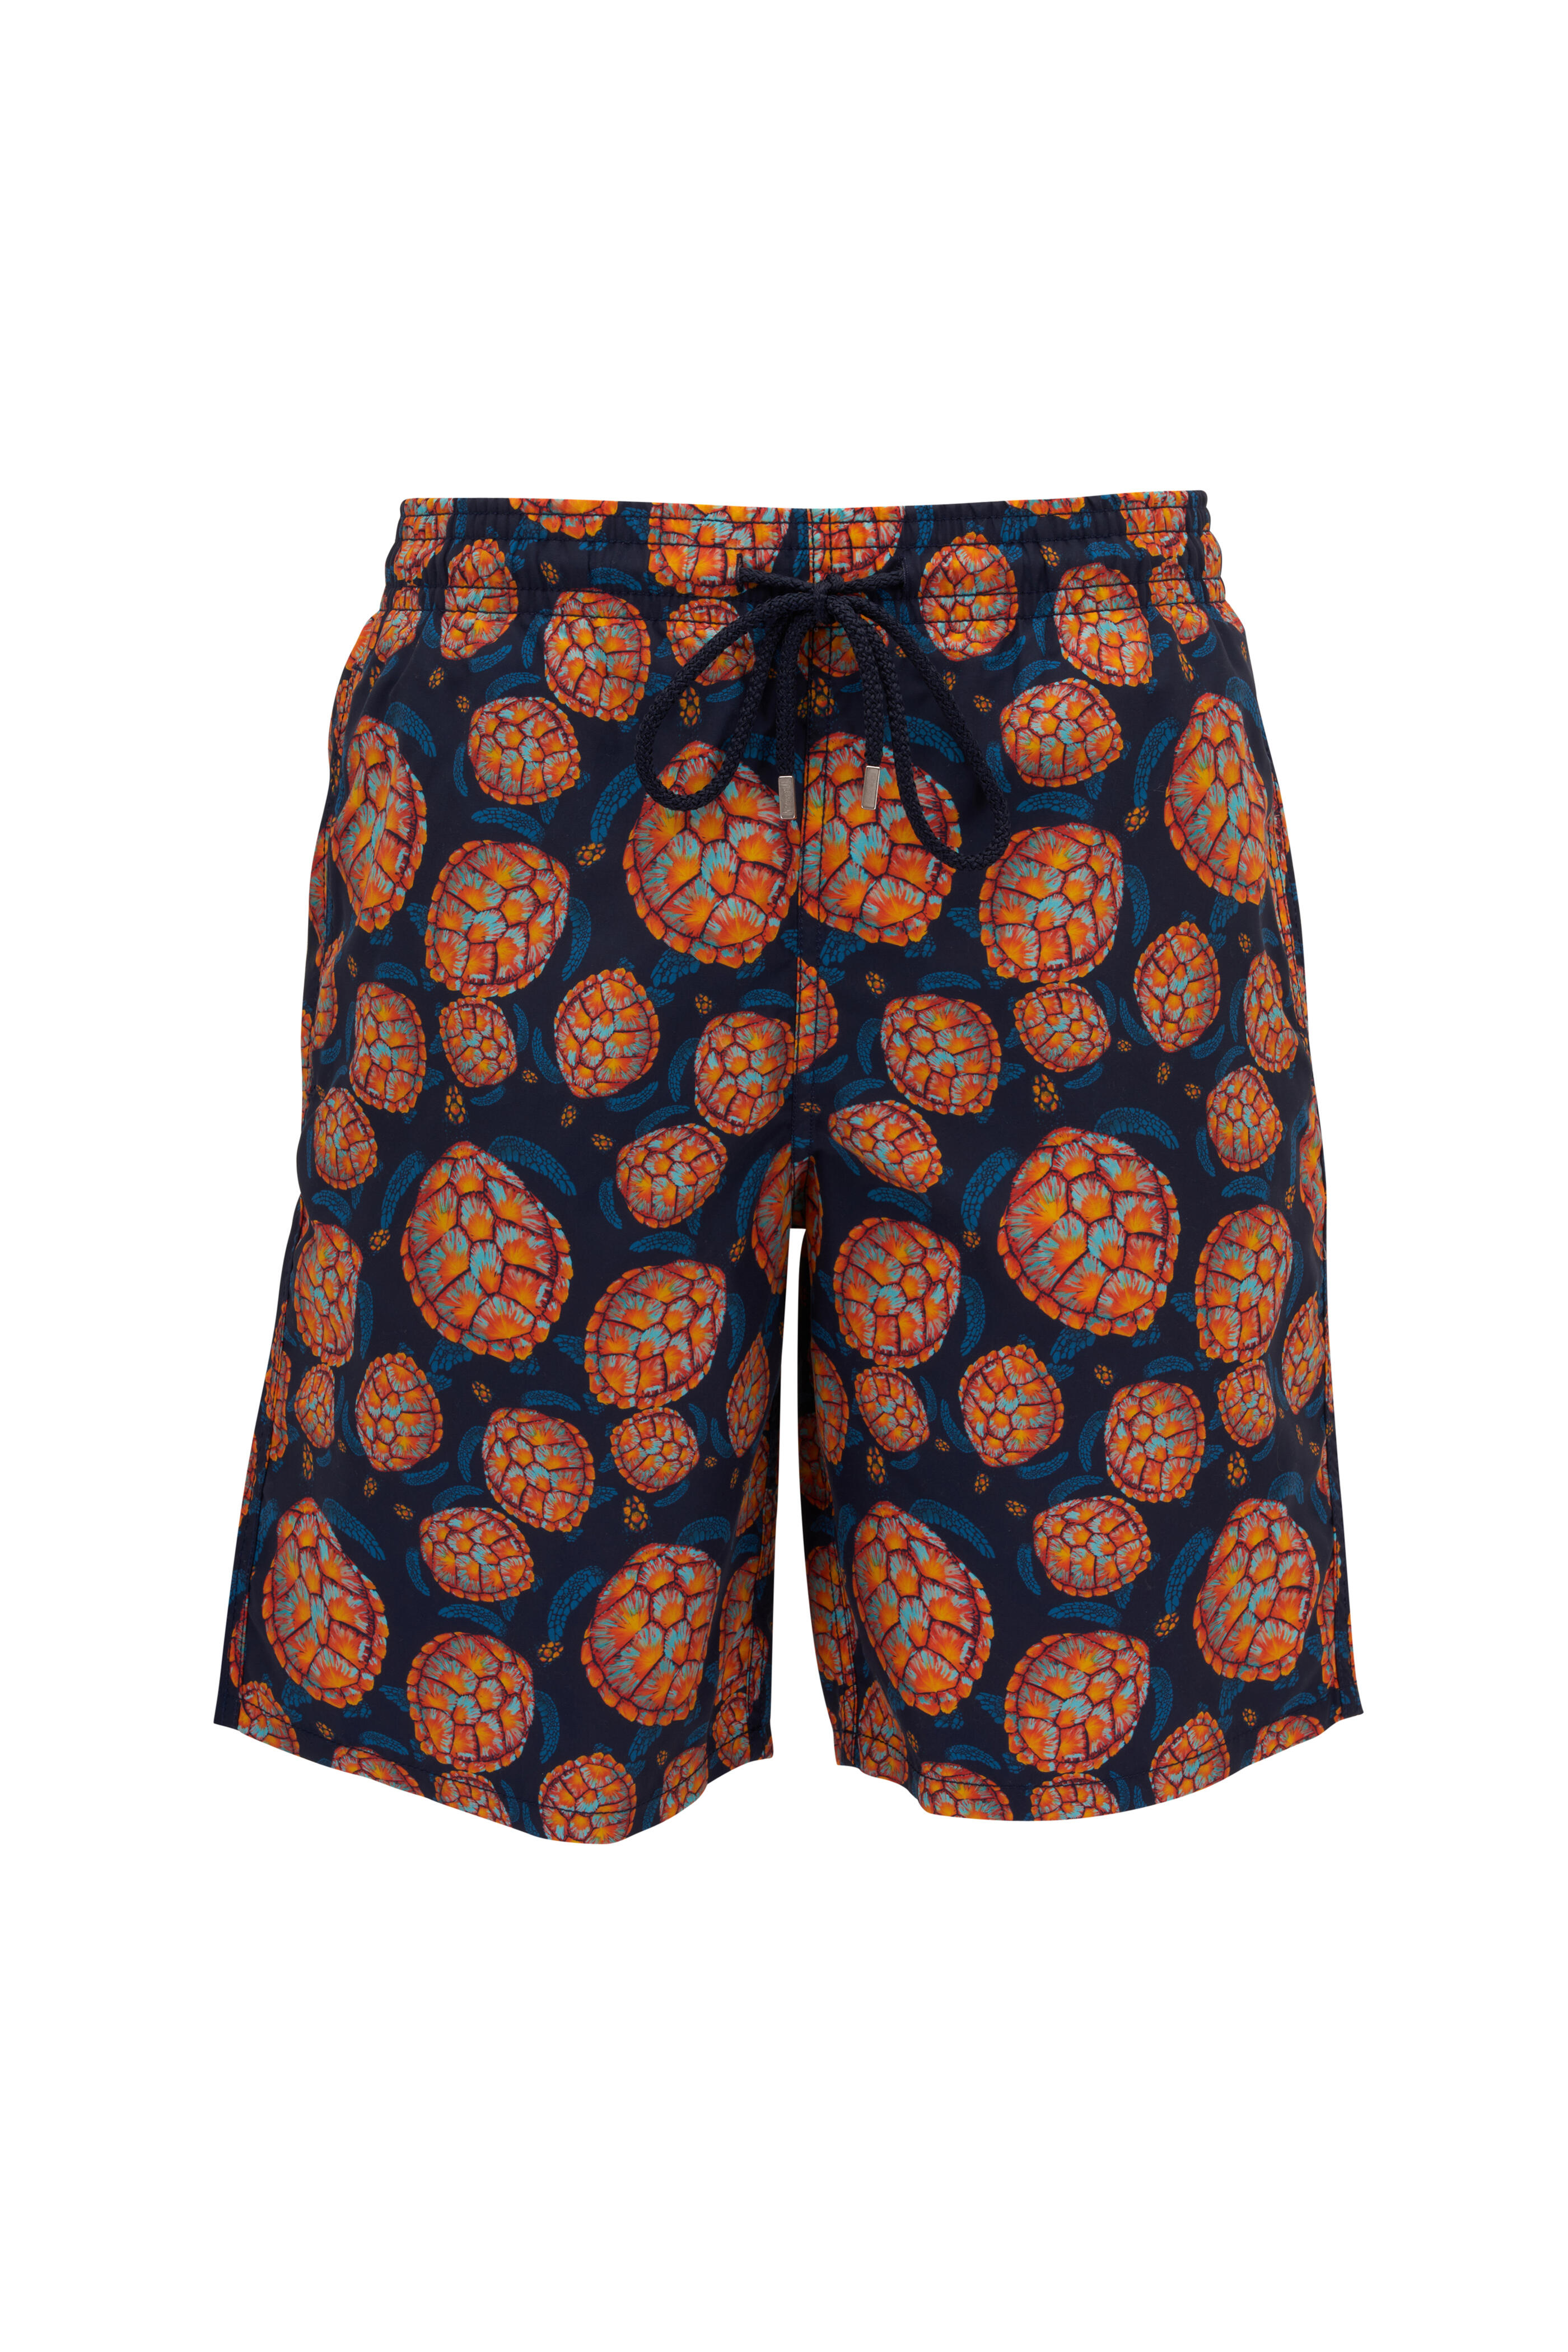 Vilebrequin - Navy & Orange Turtle Print Swim Trunks